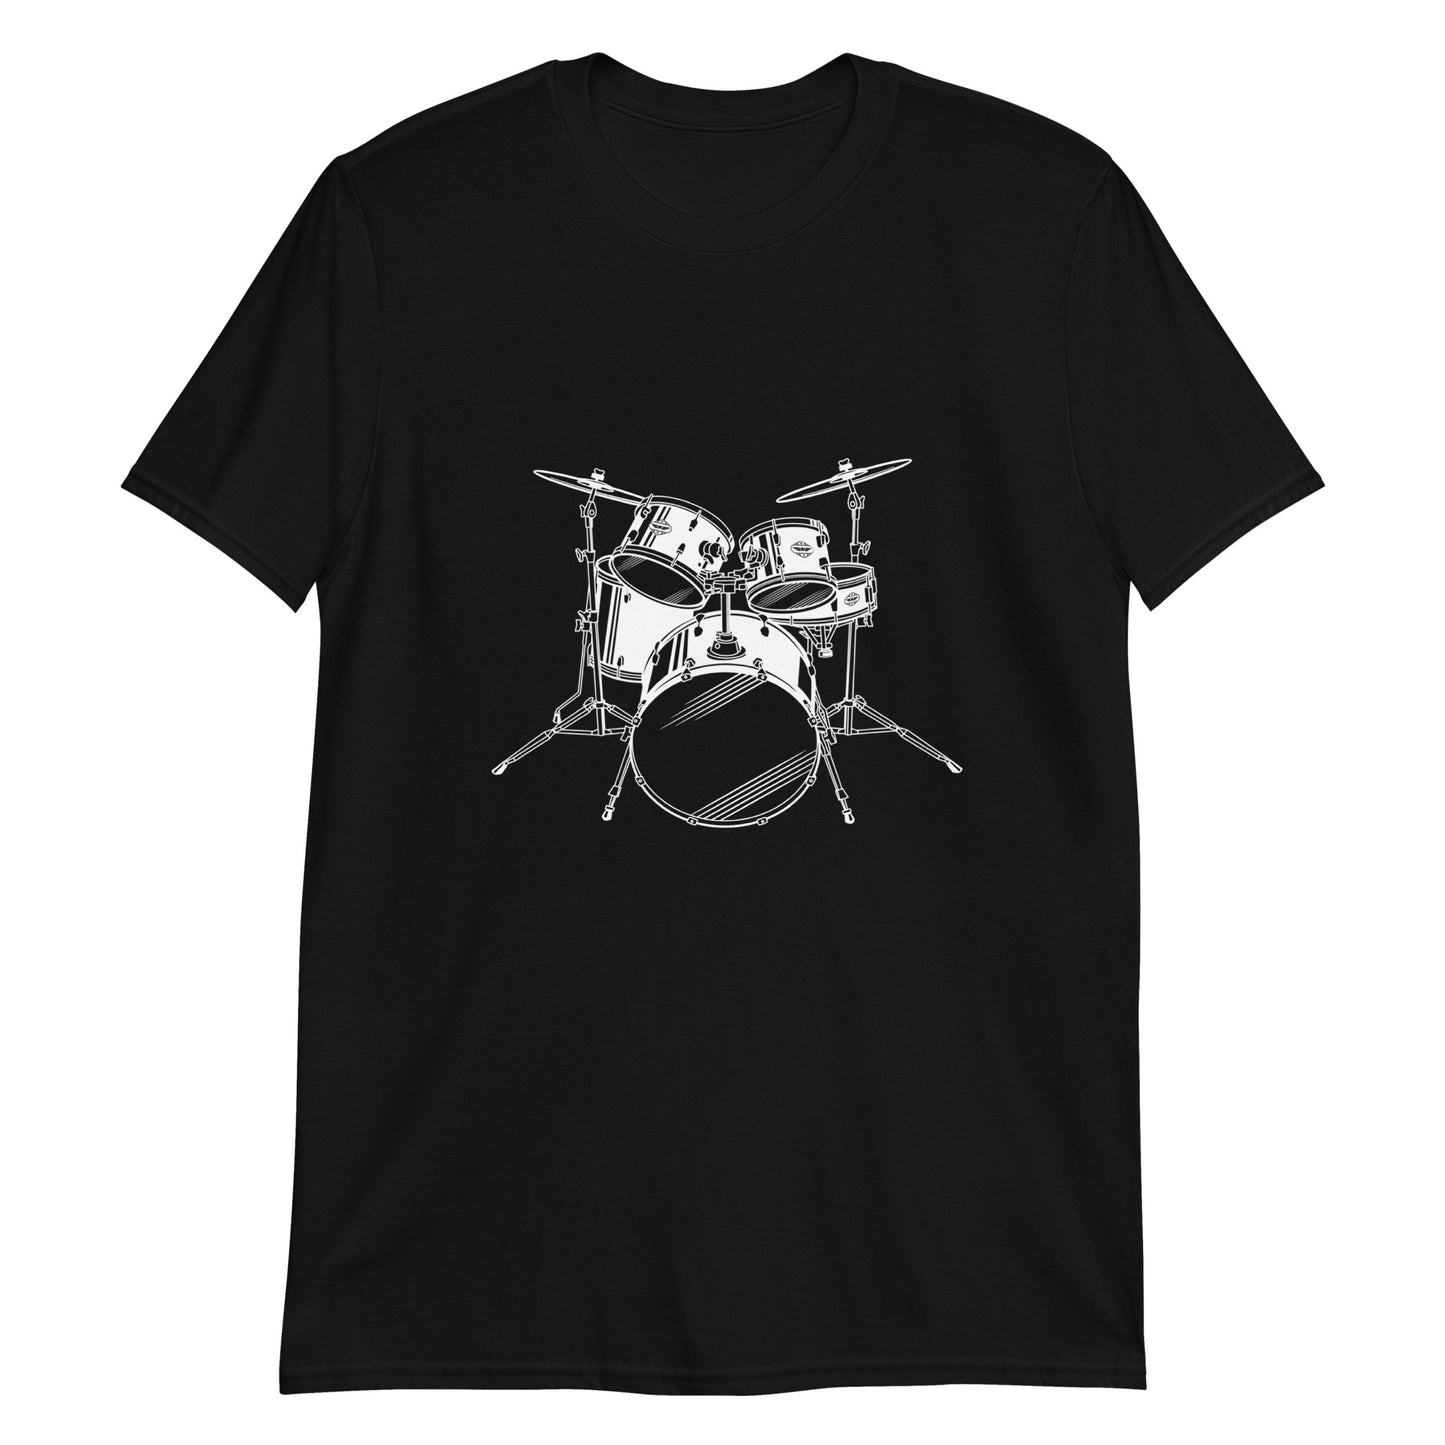 Drum set. Unisex T-Shirt